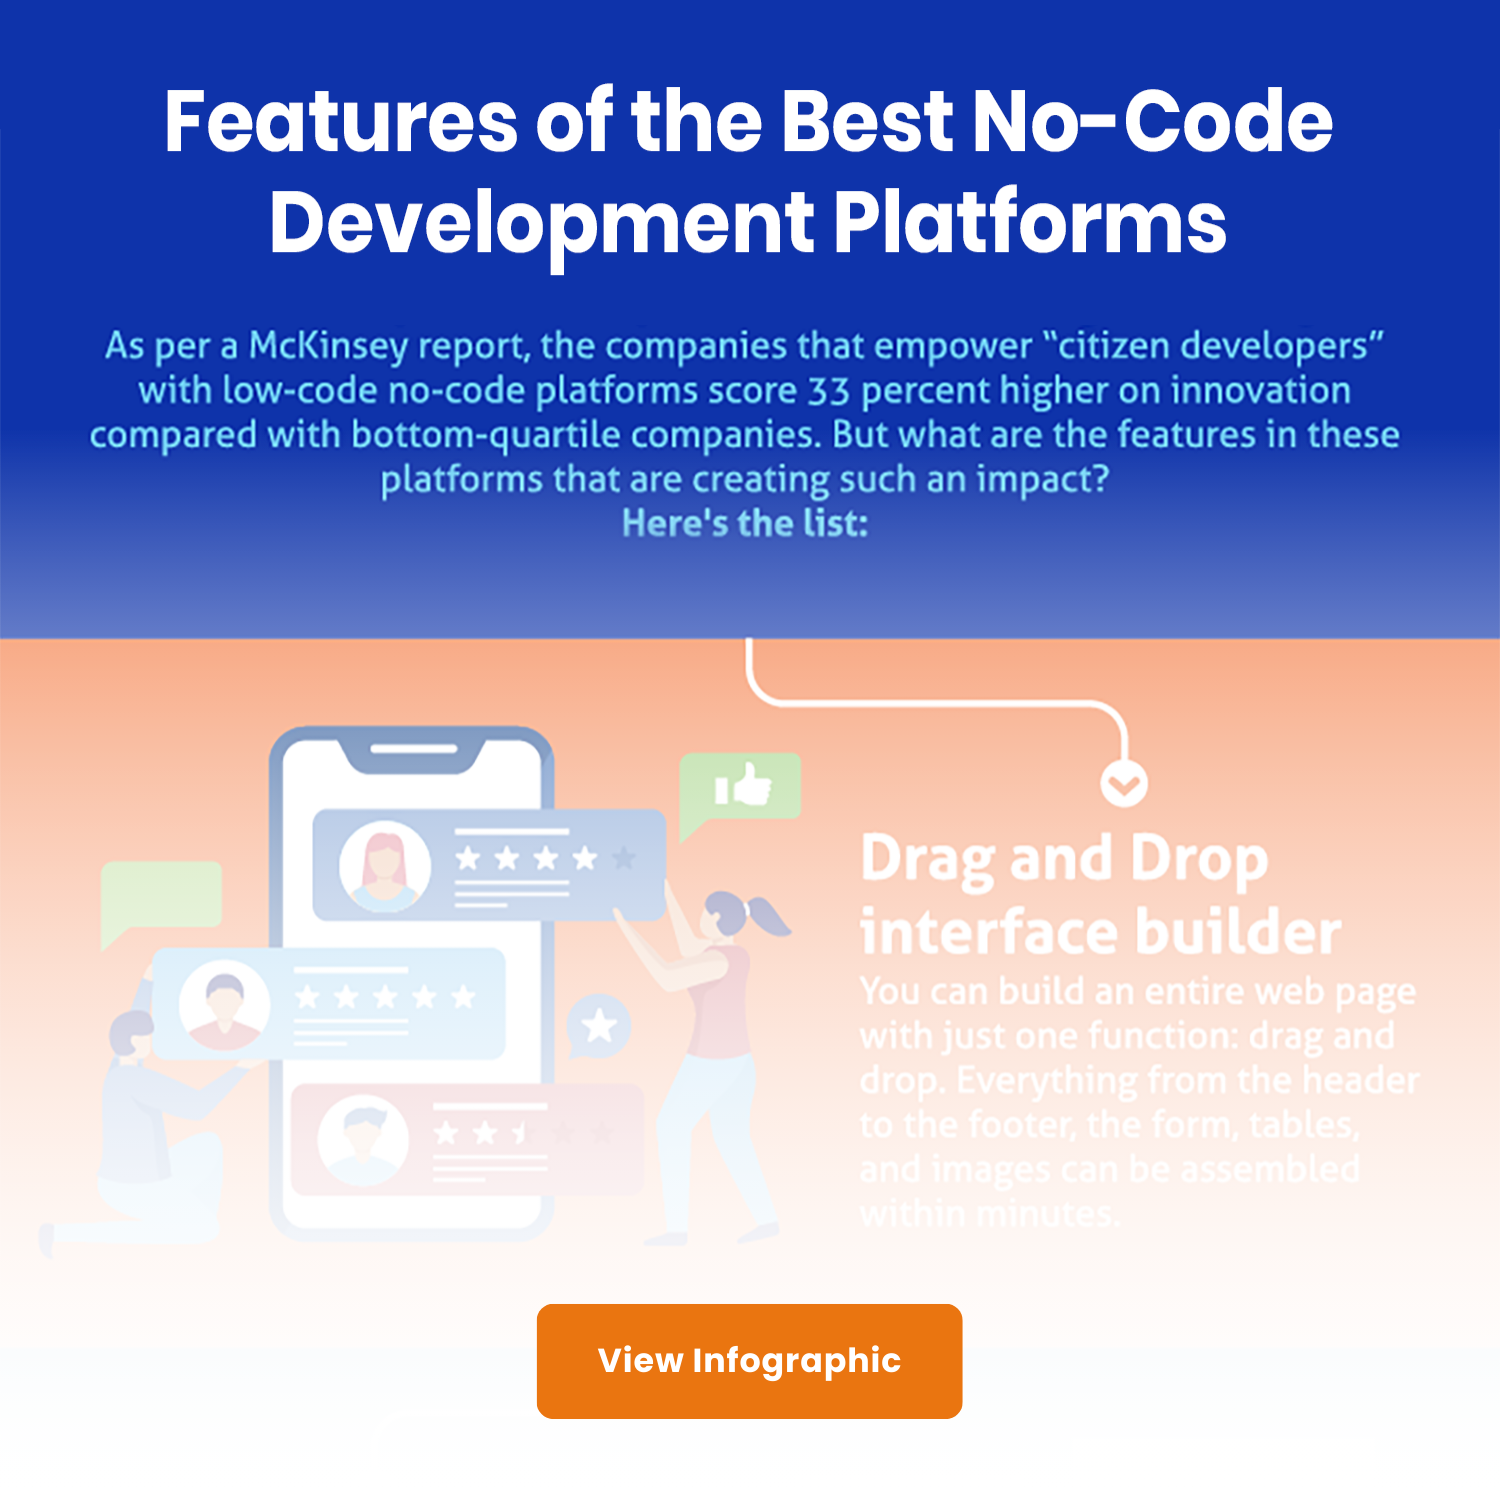 features of no-code platform infographic